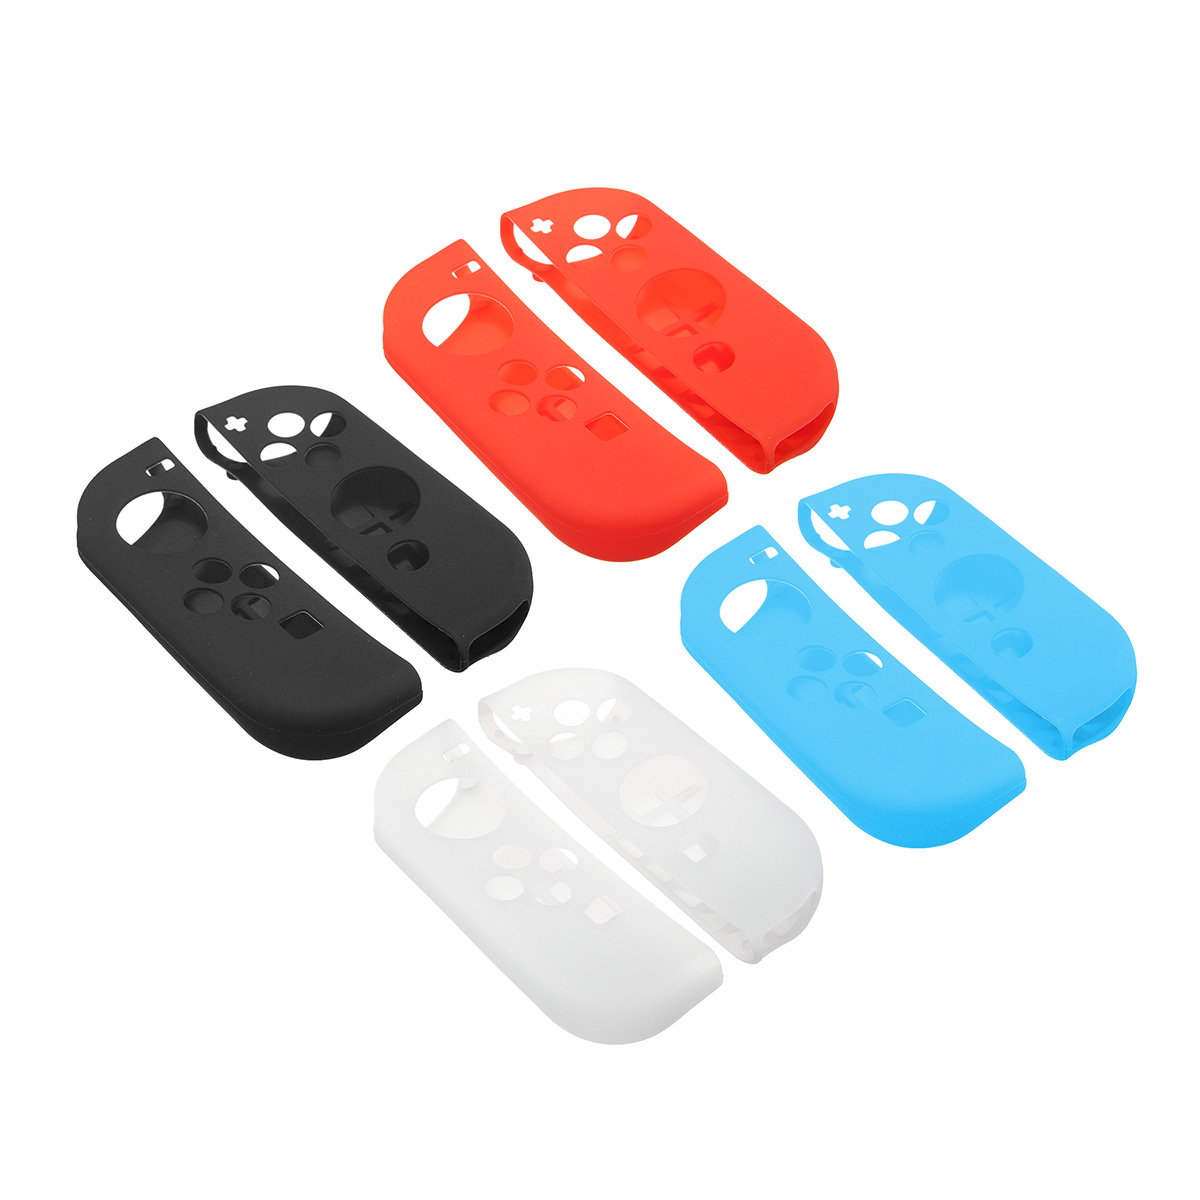 Silicon Case Protective Impact Resistant Rubber Skin Cover For Nintendo Switch Joy-Con Controller 7